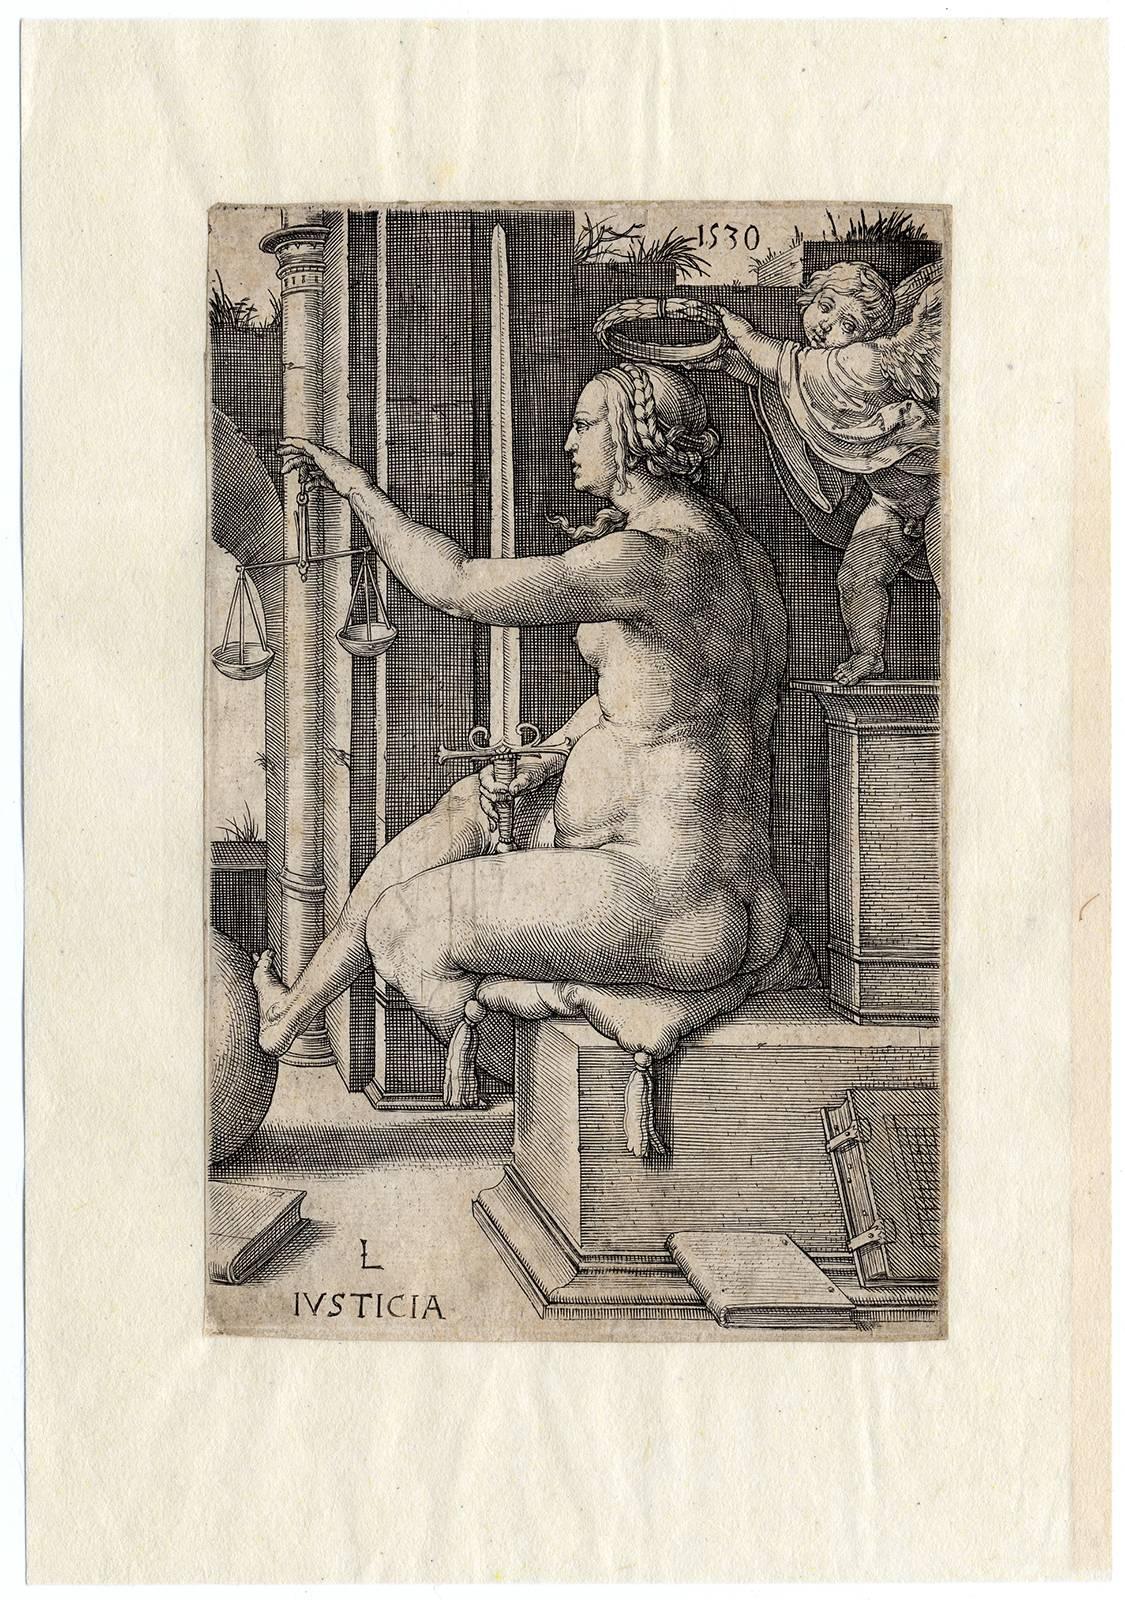 Lucas van Leyden Figurative Print - 'Justitia' - Allegory of Justice.